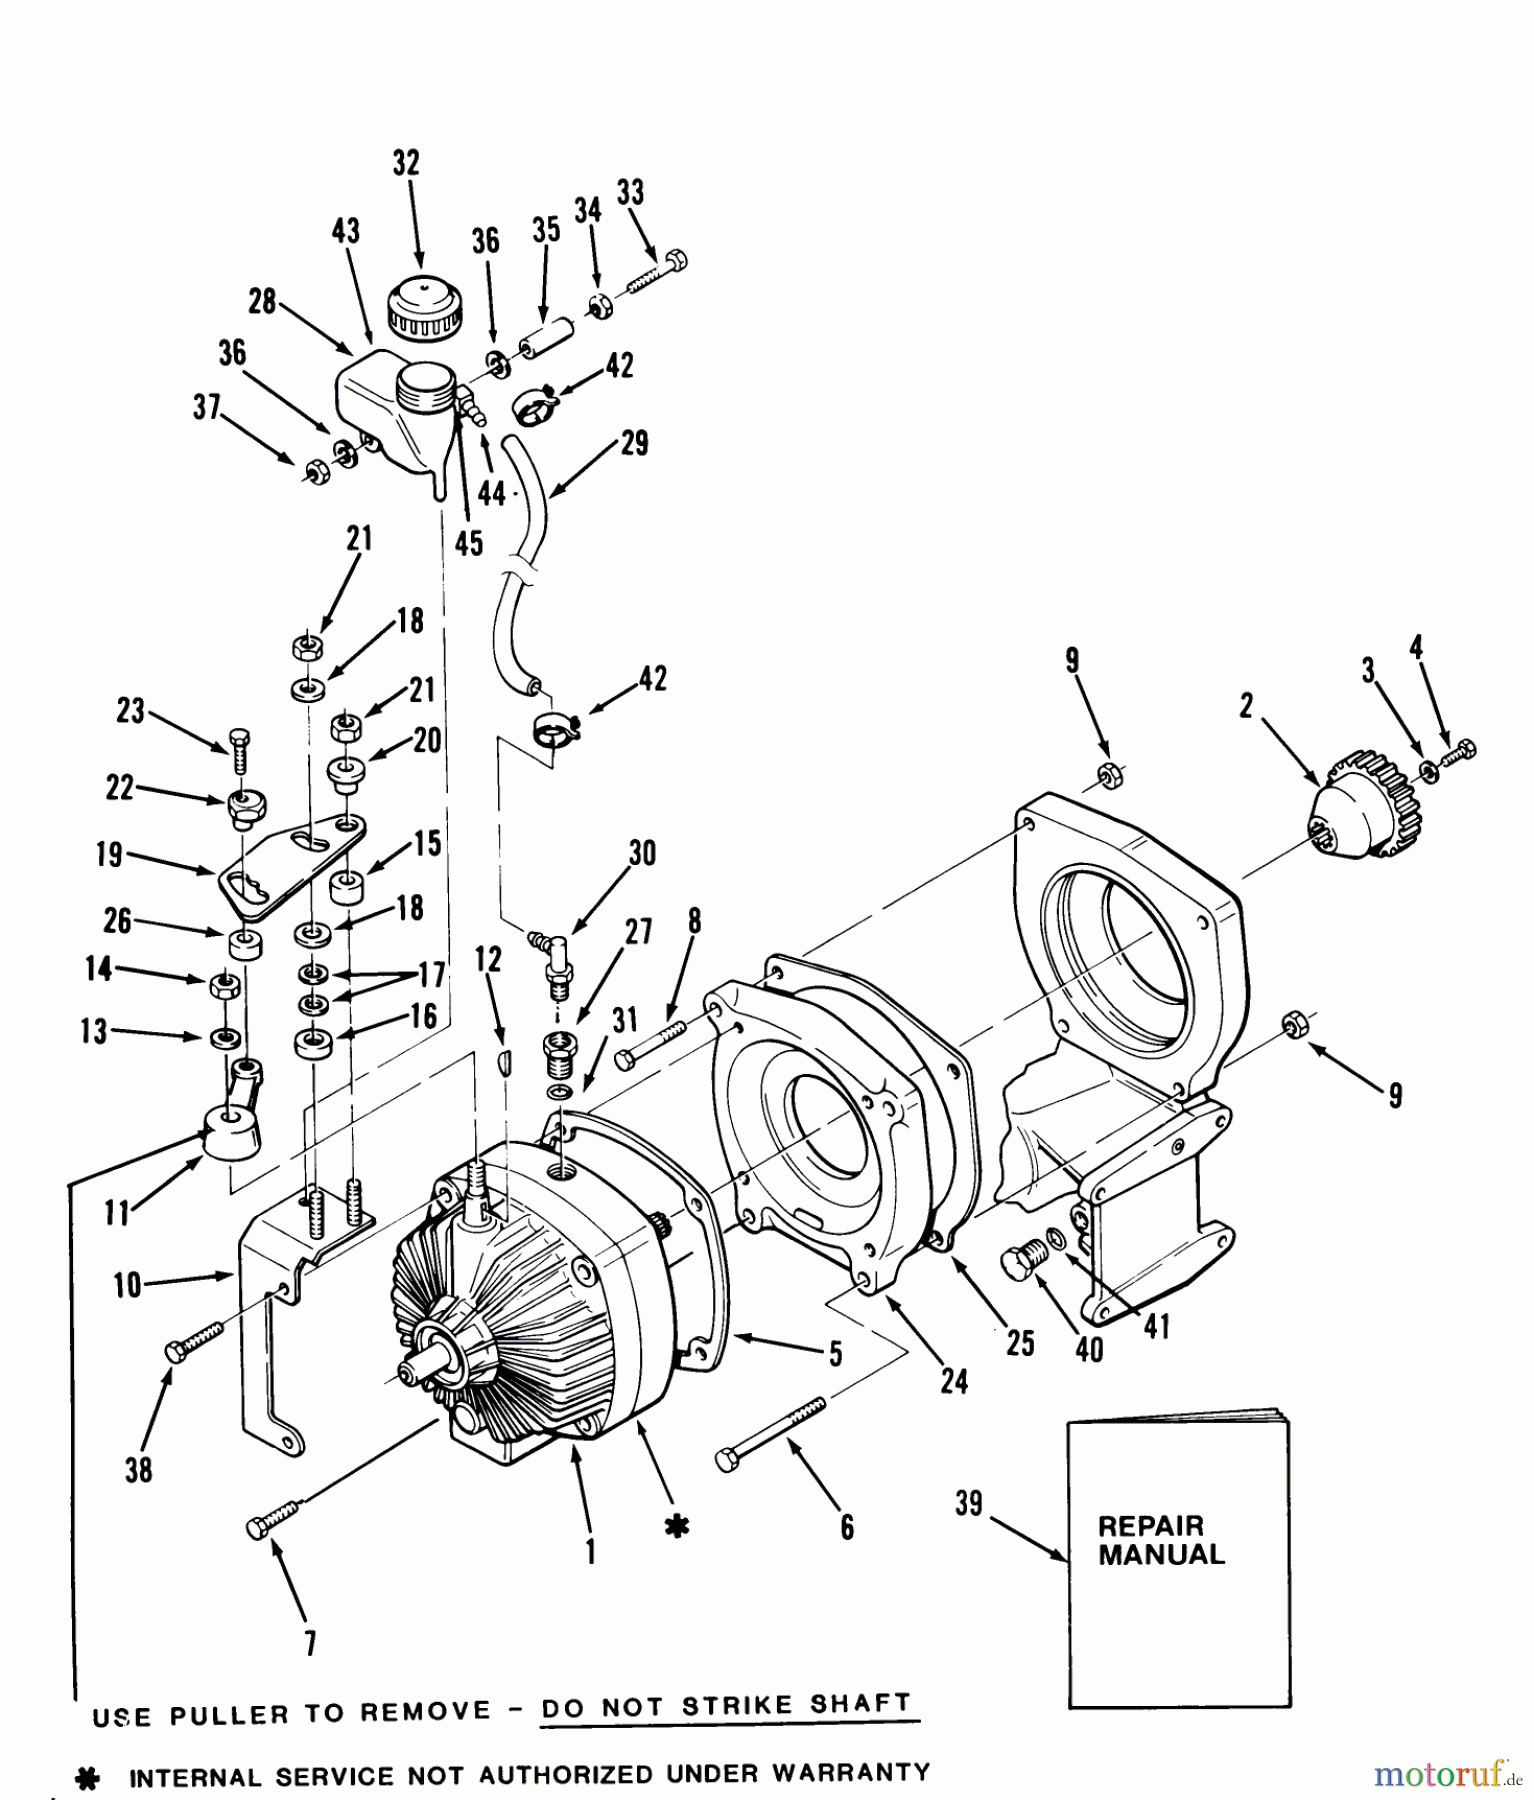  Toro Neu Mowers, Lawn & Garden Tractor Seite 1 31-20OE02 (520-H) - Toro 520-H Garden Tractor, 1989 AUTOMATIC TRANSMISSION-516-H & 518-H